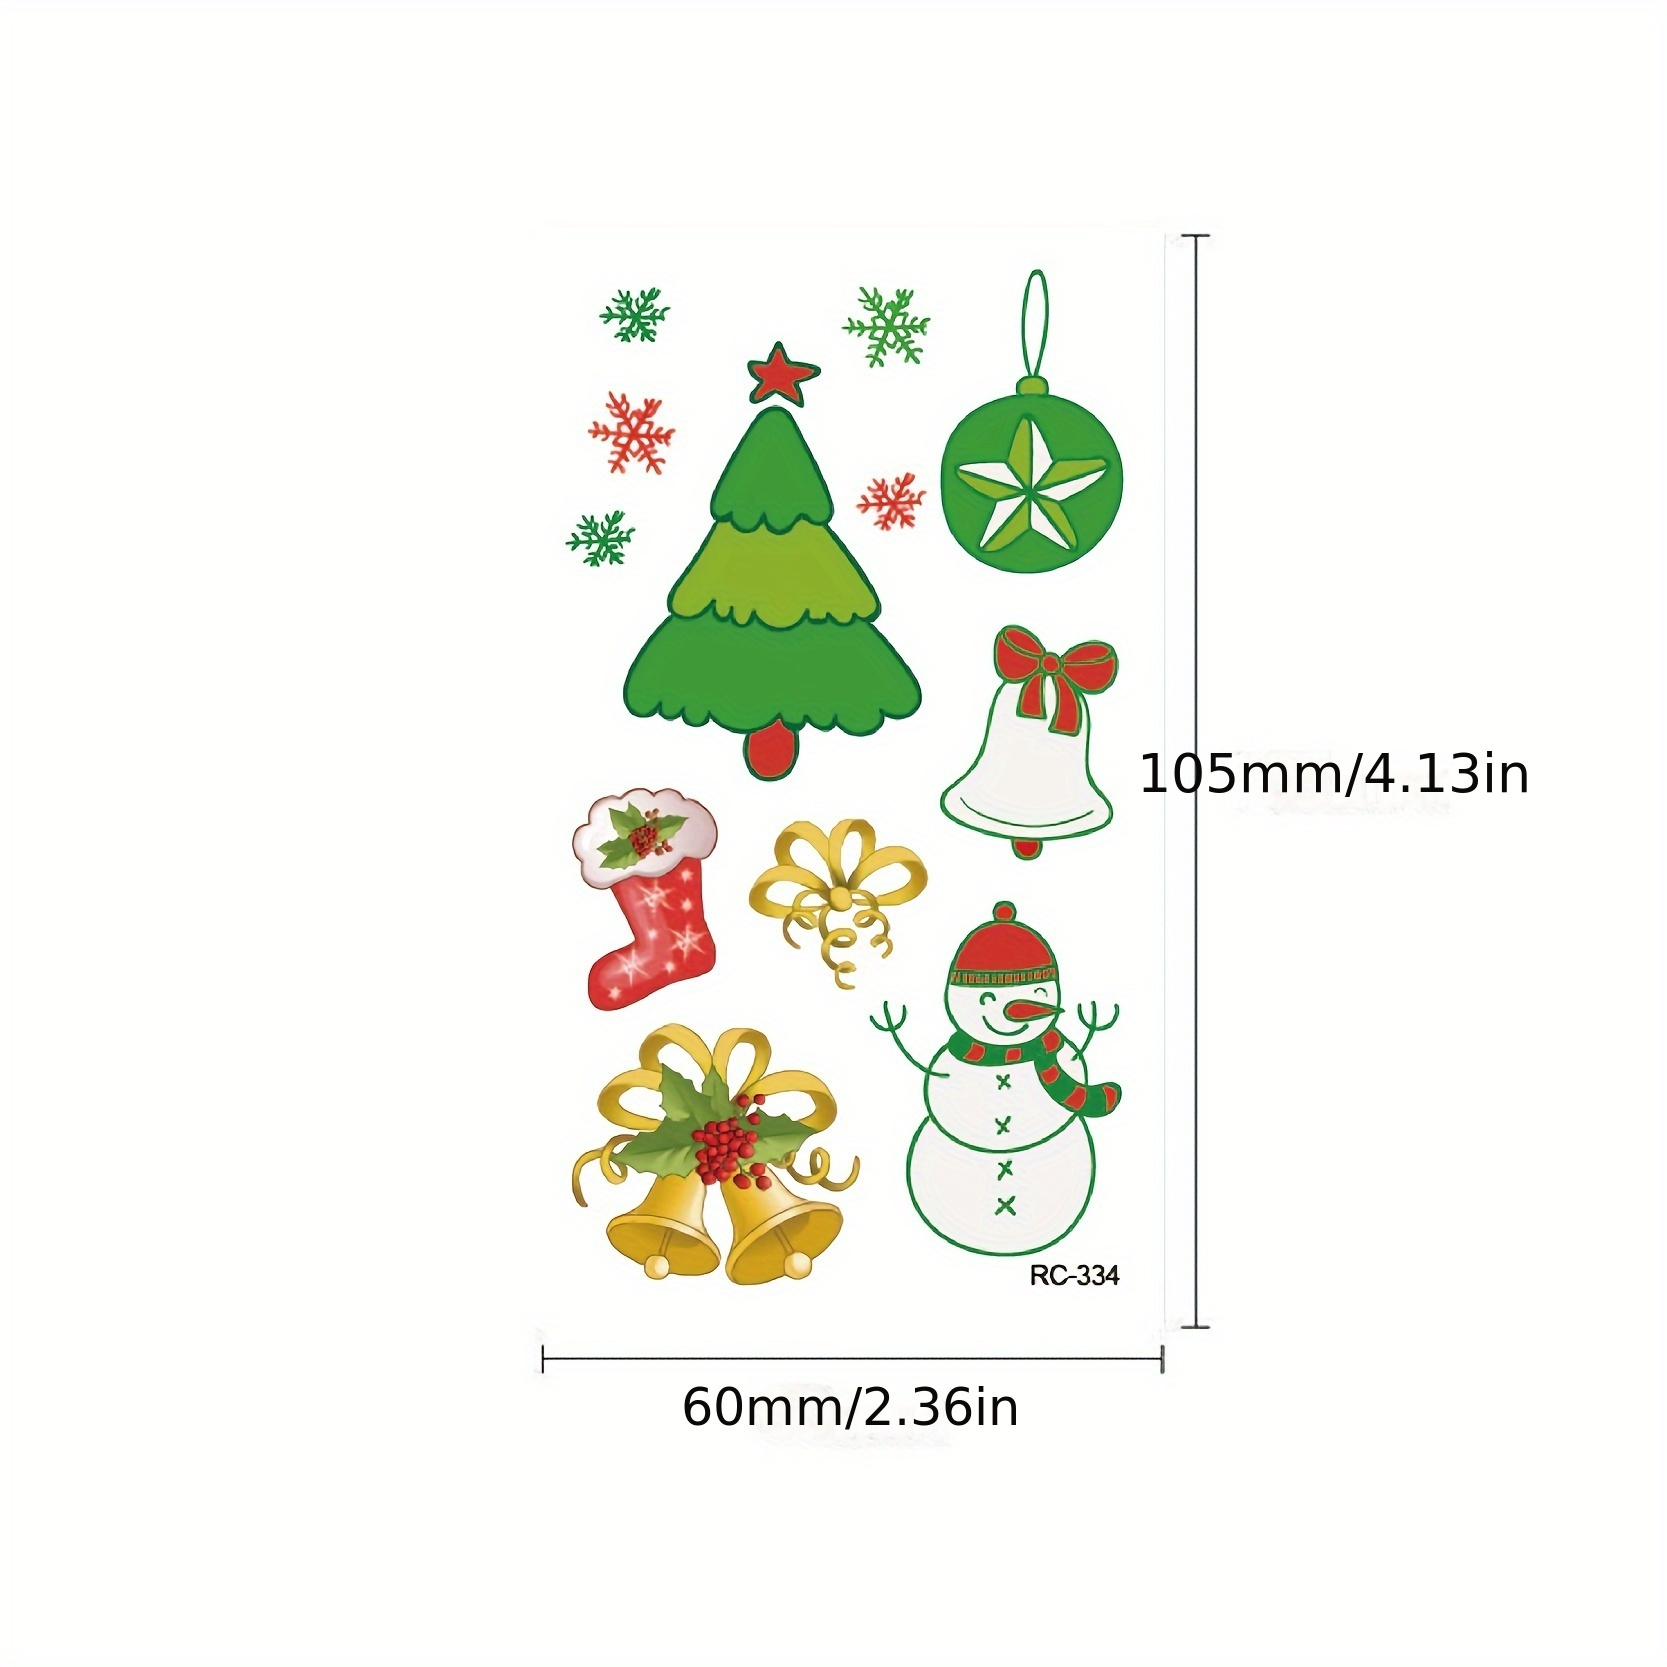 【Merry, Merry Christmas】12 Sheets Christmas Makeup Face Tattoos Stickers  Waterproof Sweet Santa Claus Snowman Makeup Stickers Lovely Face Tattoos For